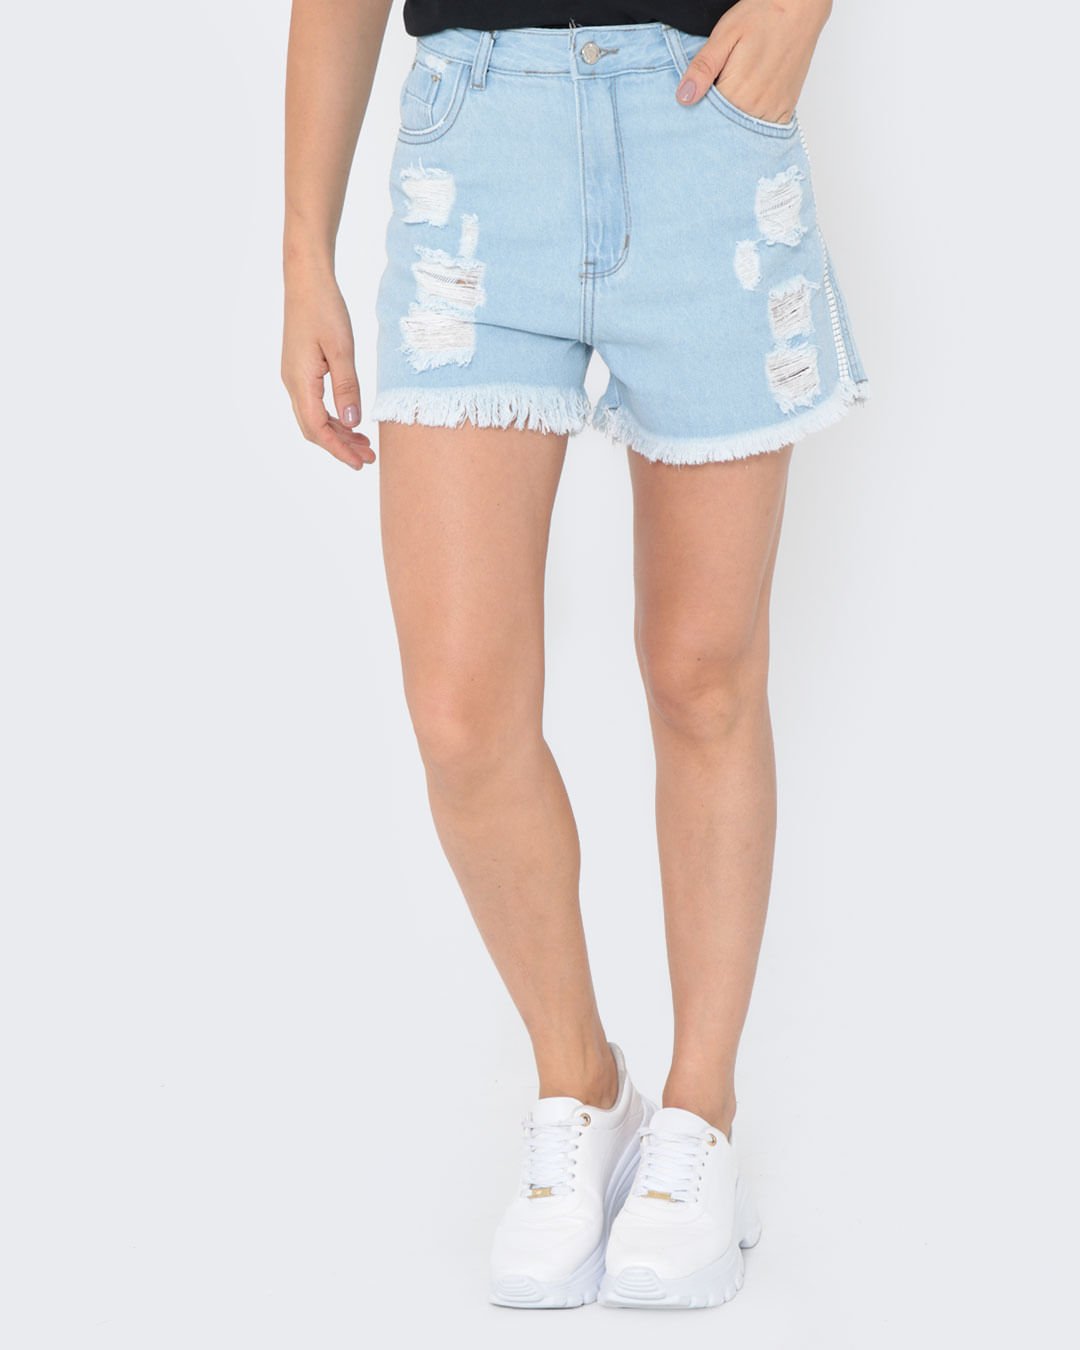 Shorts-Jeans-Detalhe-Azul-Claro